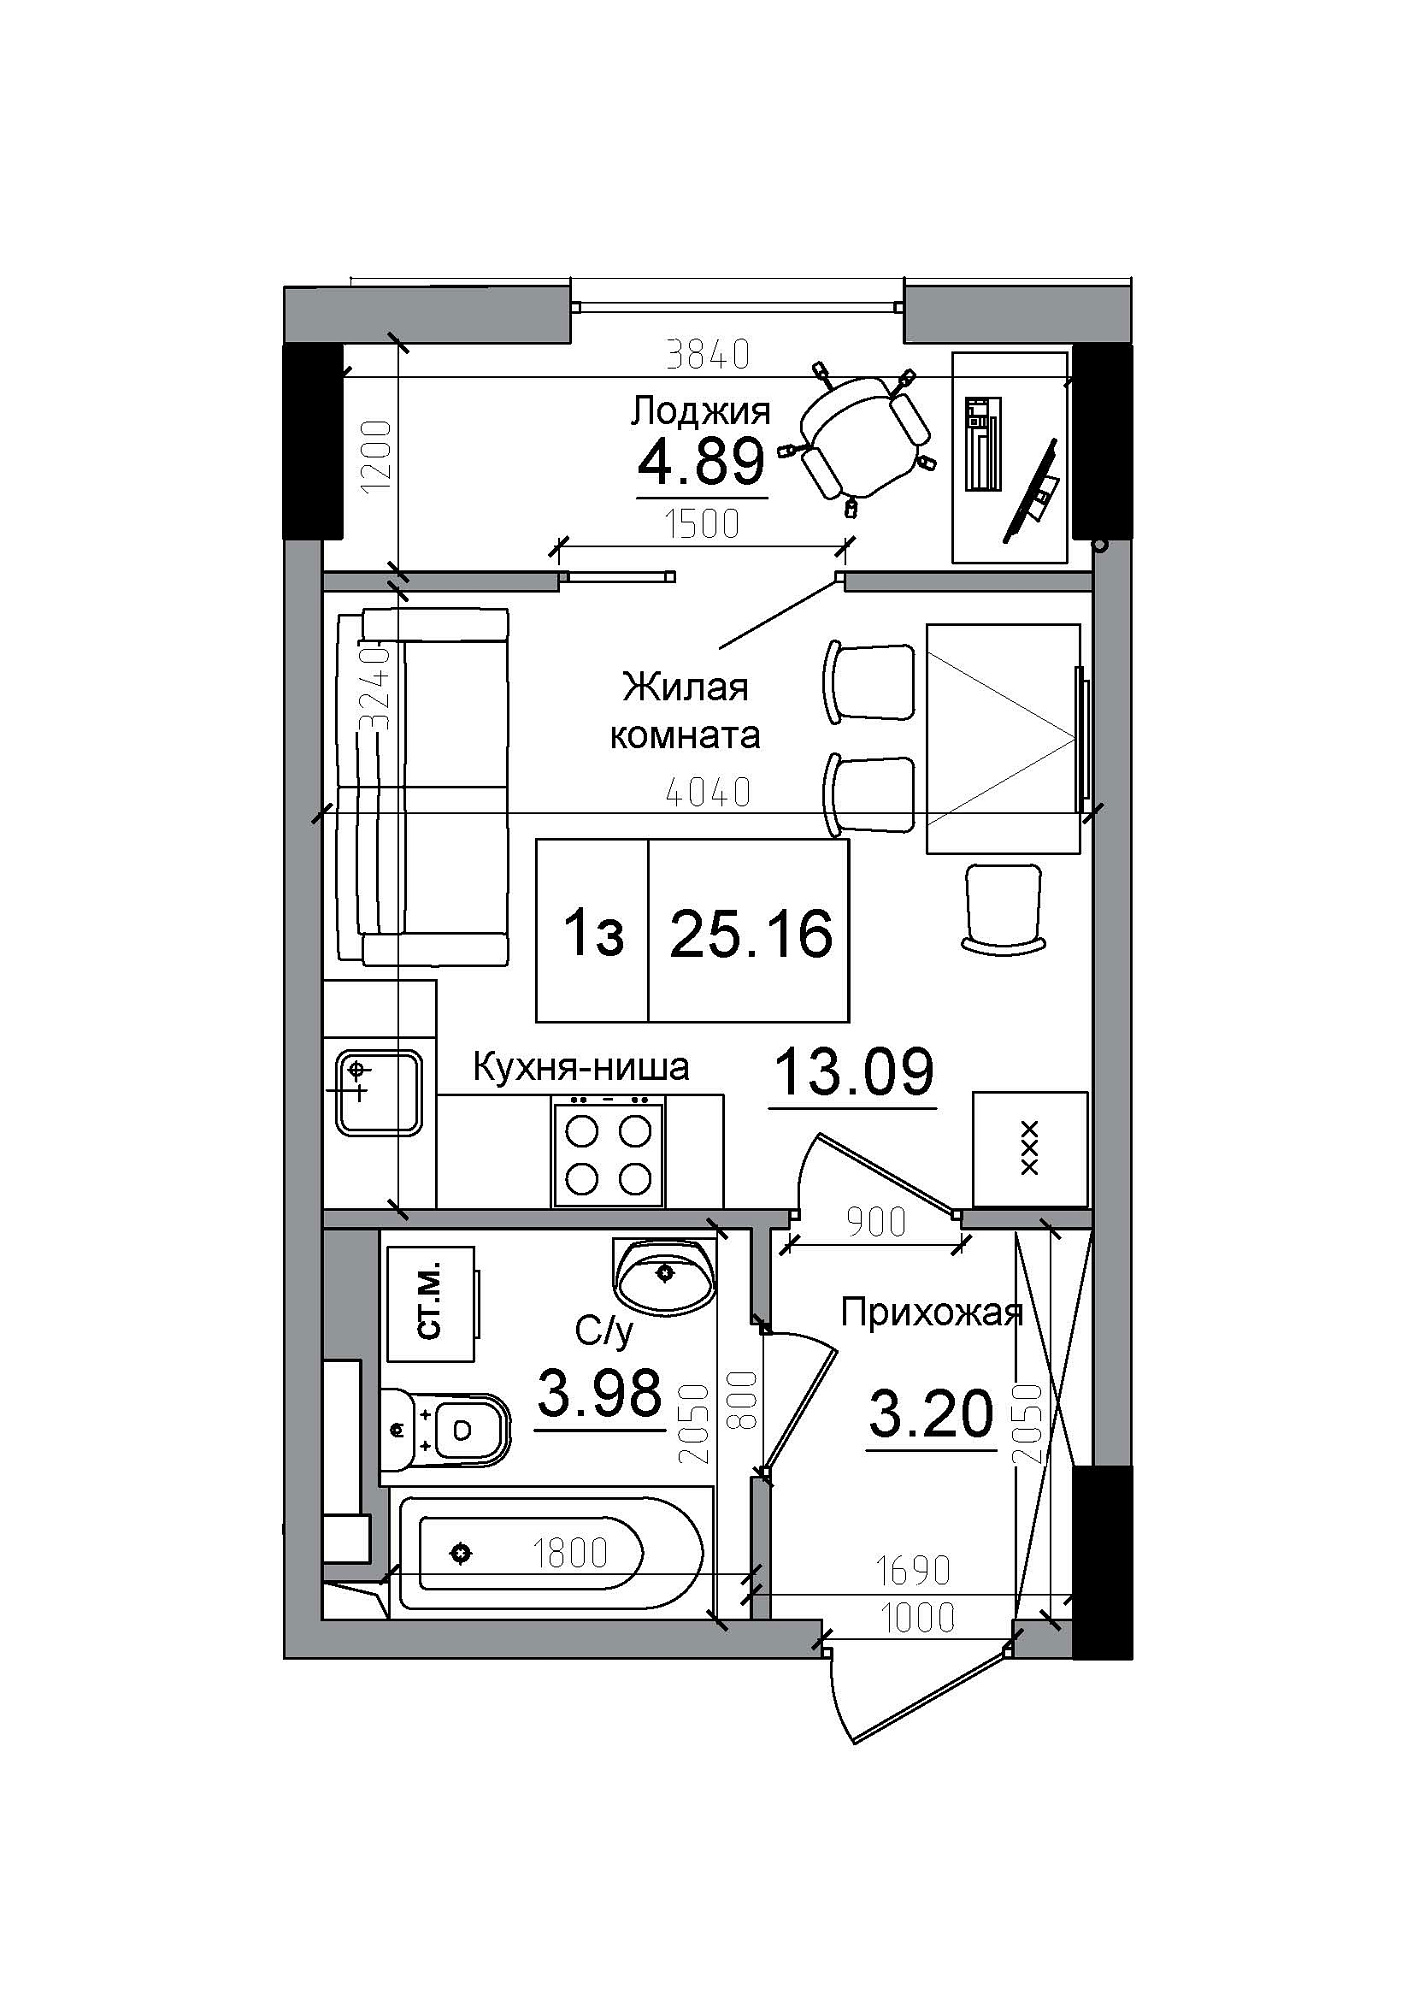 Планировка Smart-квартира площей 25.16м2, AB-12-03/00009.